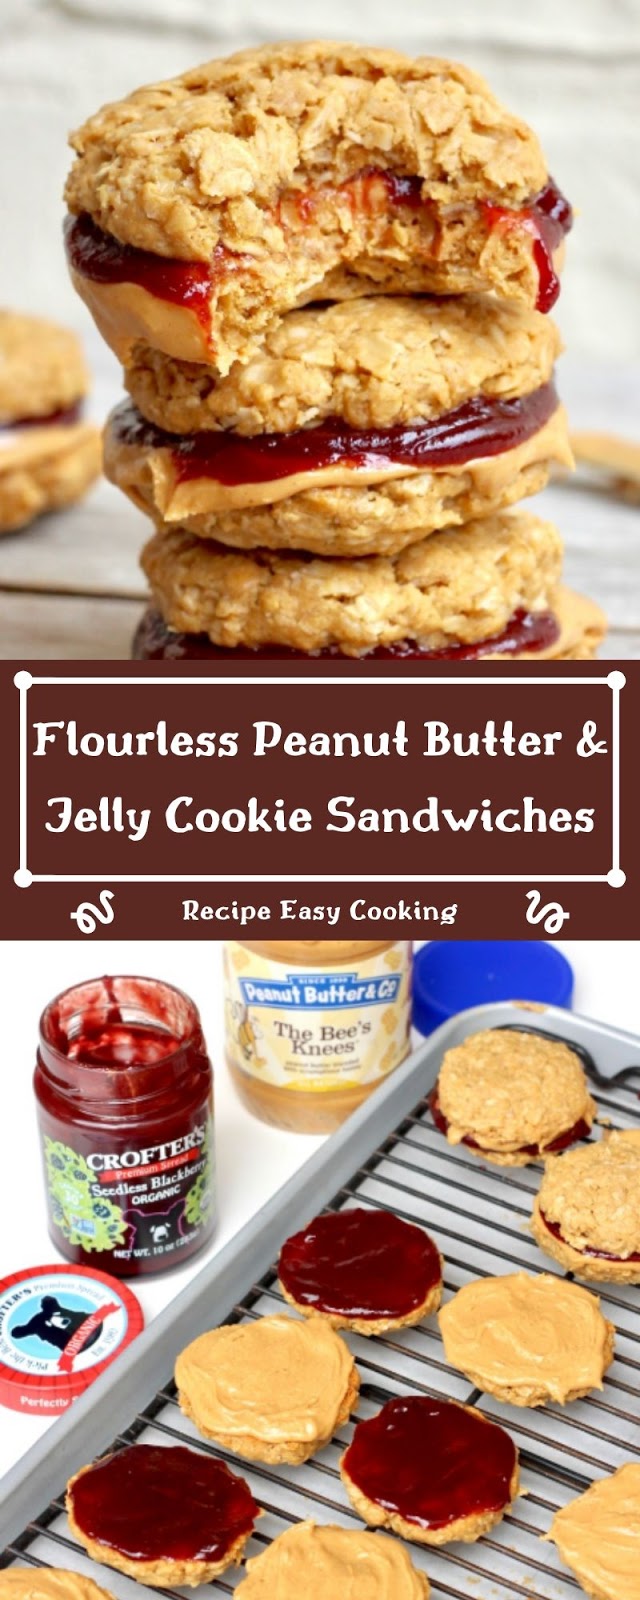 Flourless Peanut Butter & Jelly Cookie Sandwiches